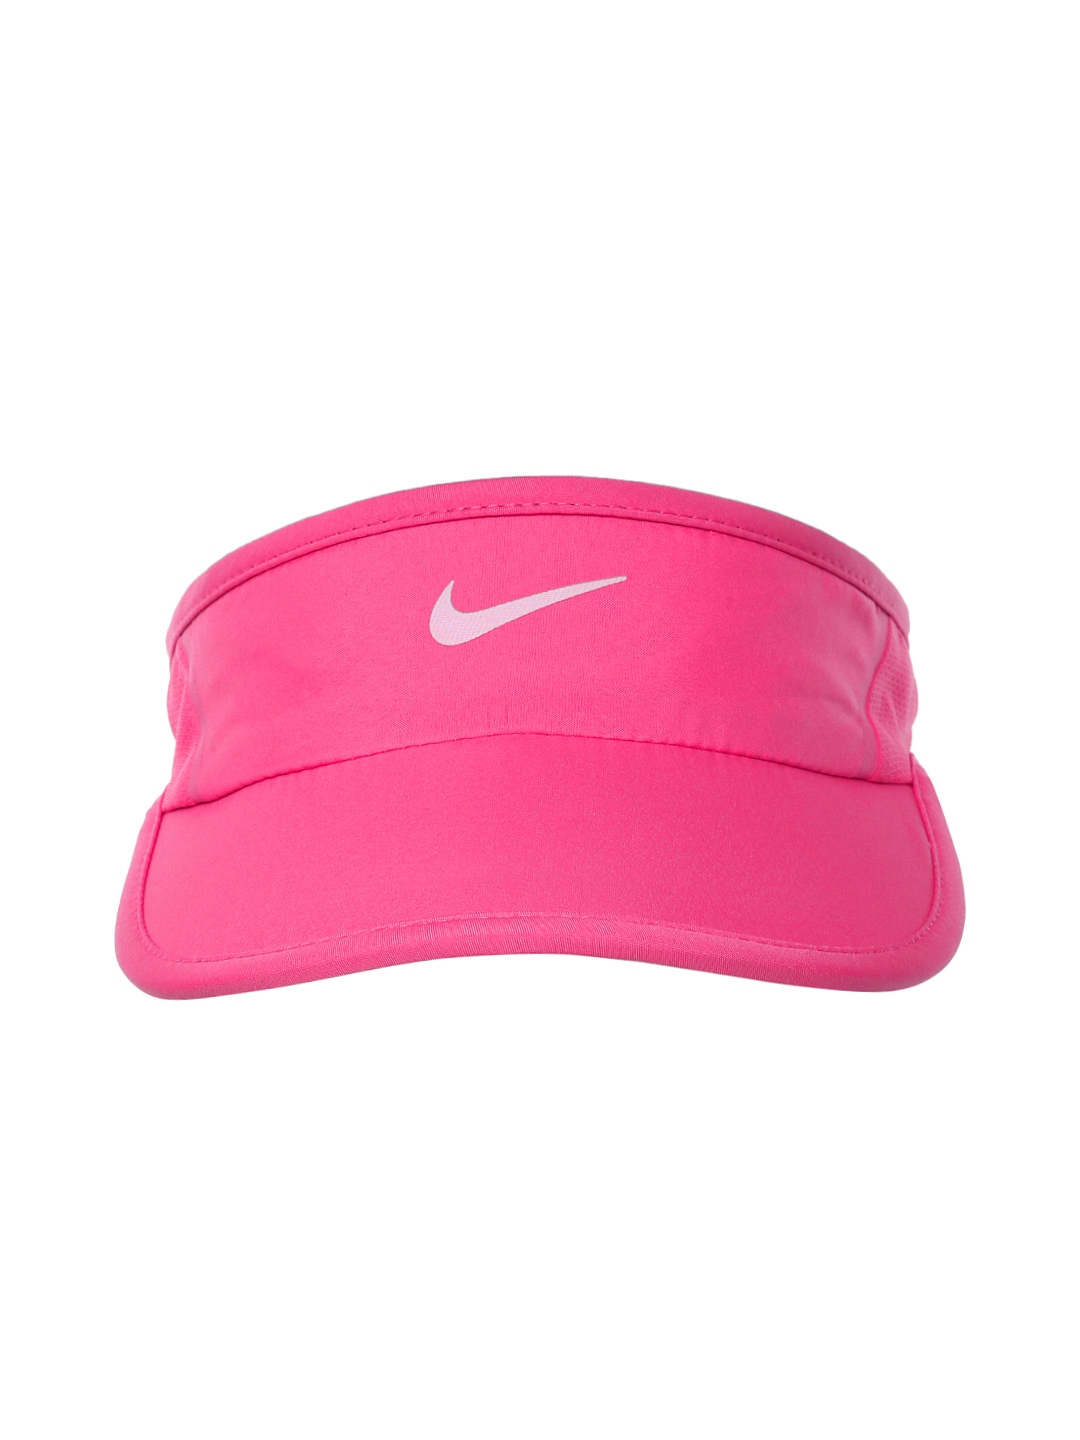 Buy > nike women's tennis hat > in stock